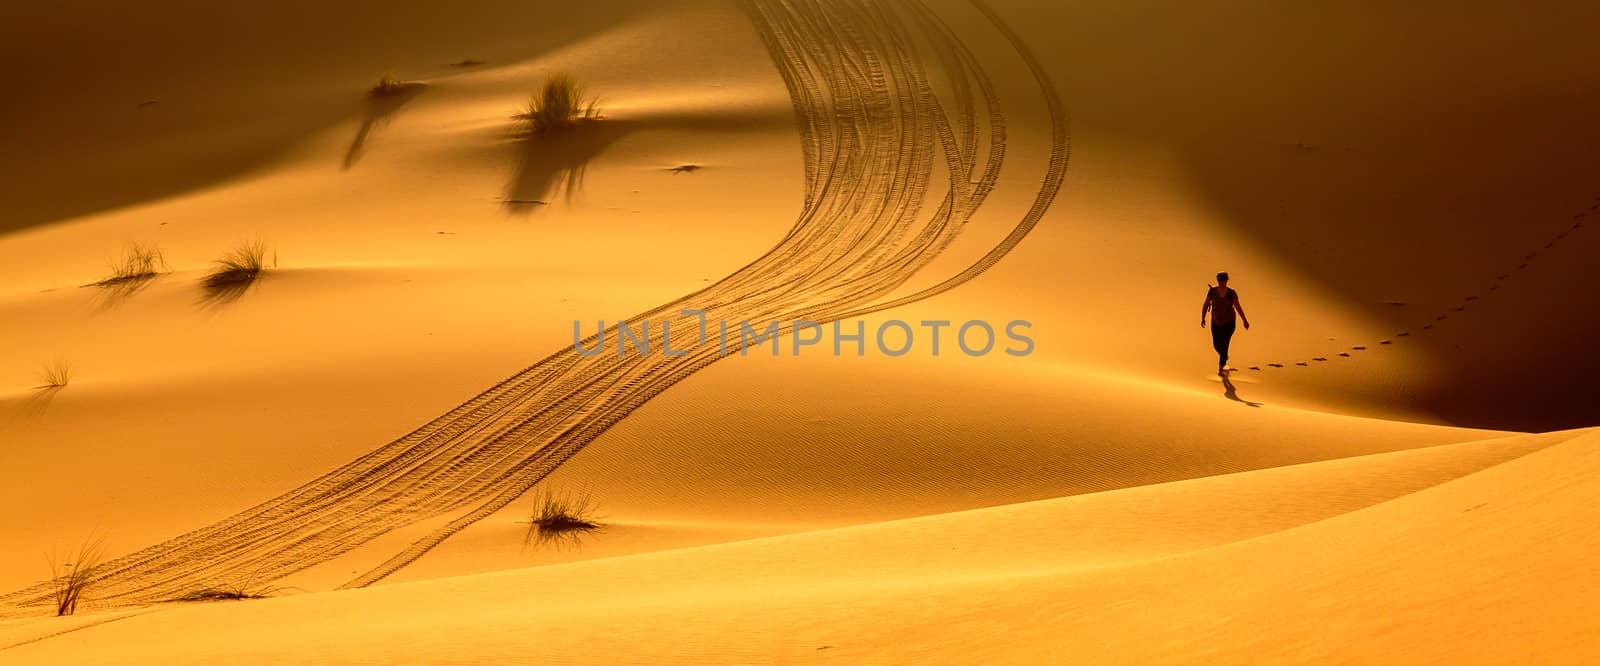 Merzouga, Morocco - Feb 24, 2016: Woman trekking along hot desert, beautiful orange sandy dunes, exploring Sahara, active vacation, discovering nature concept